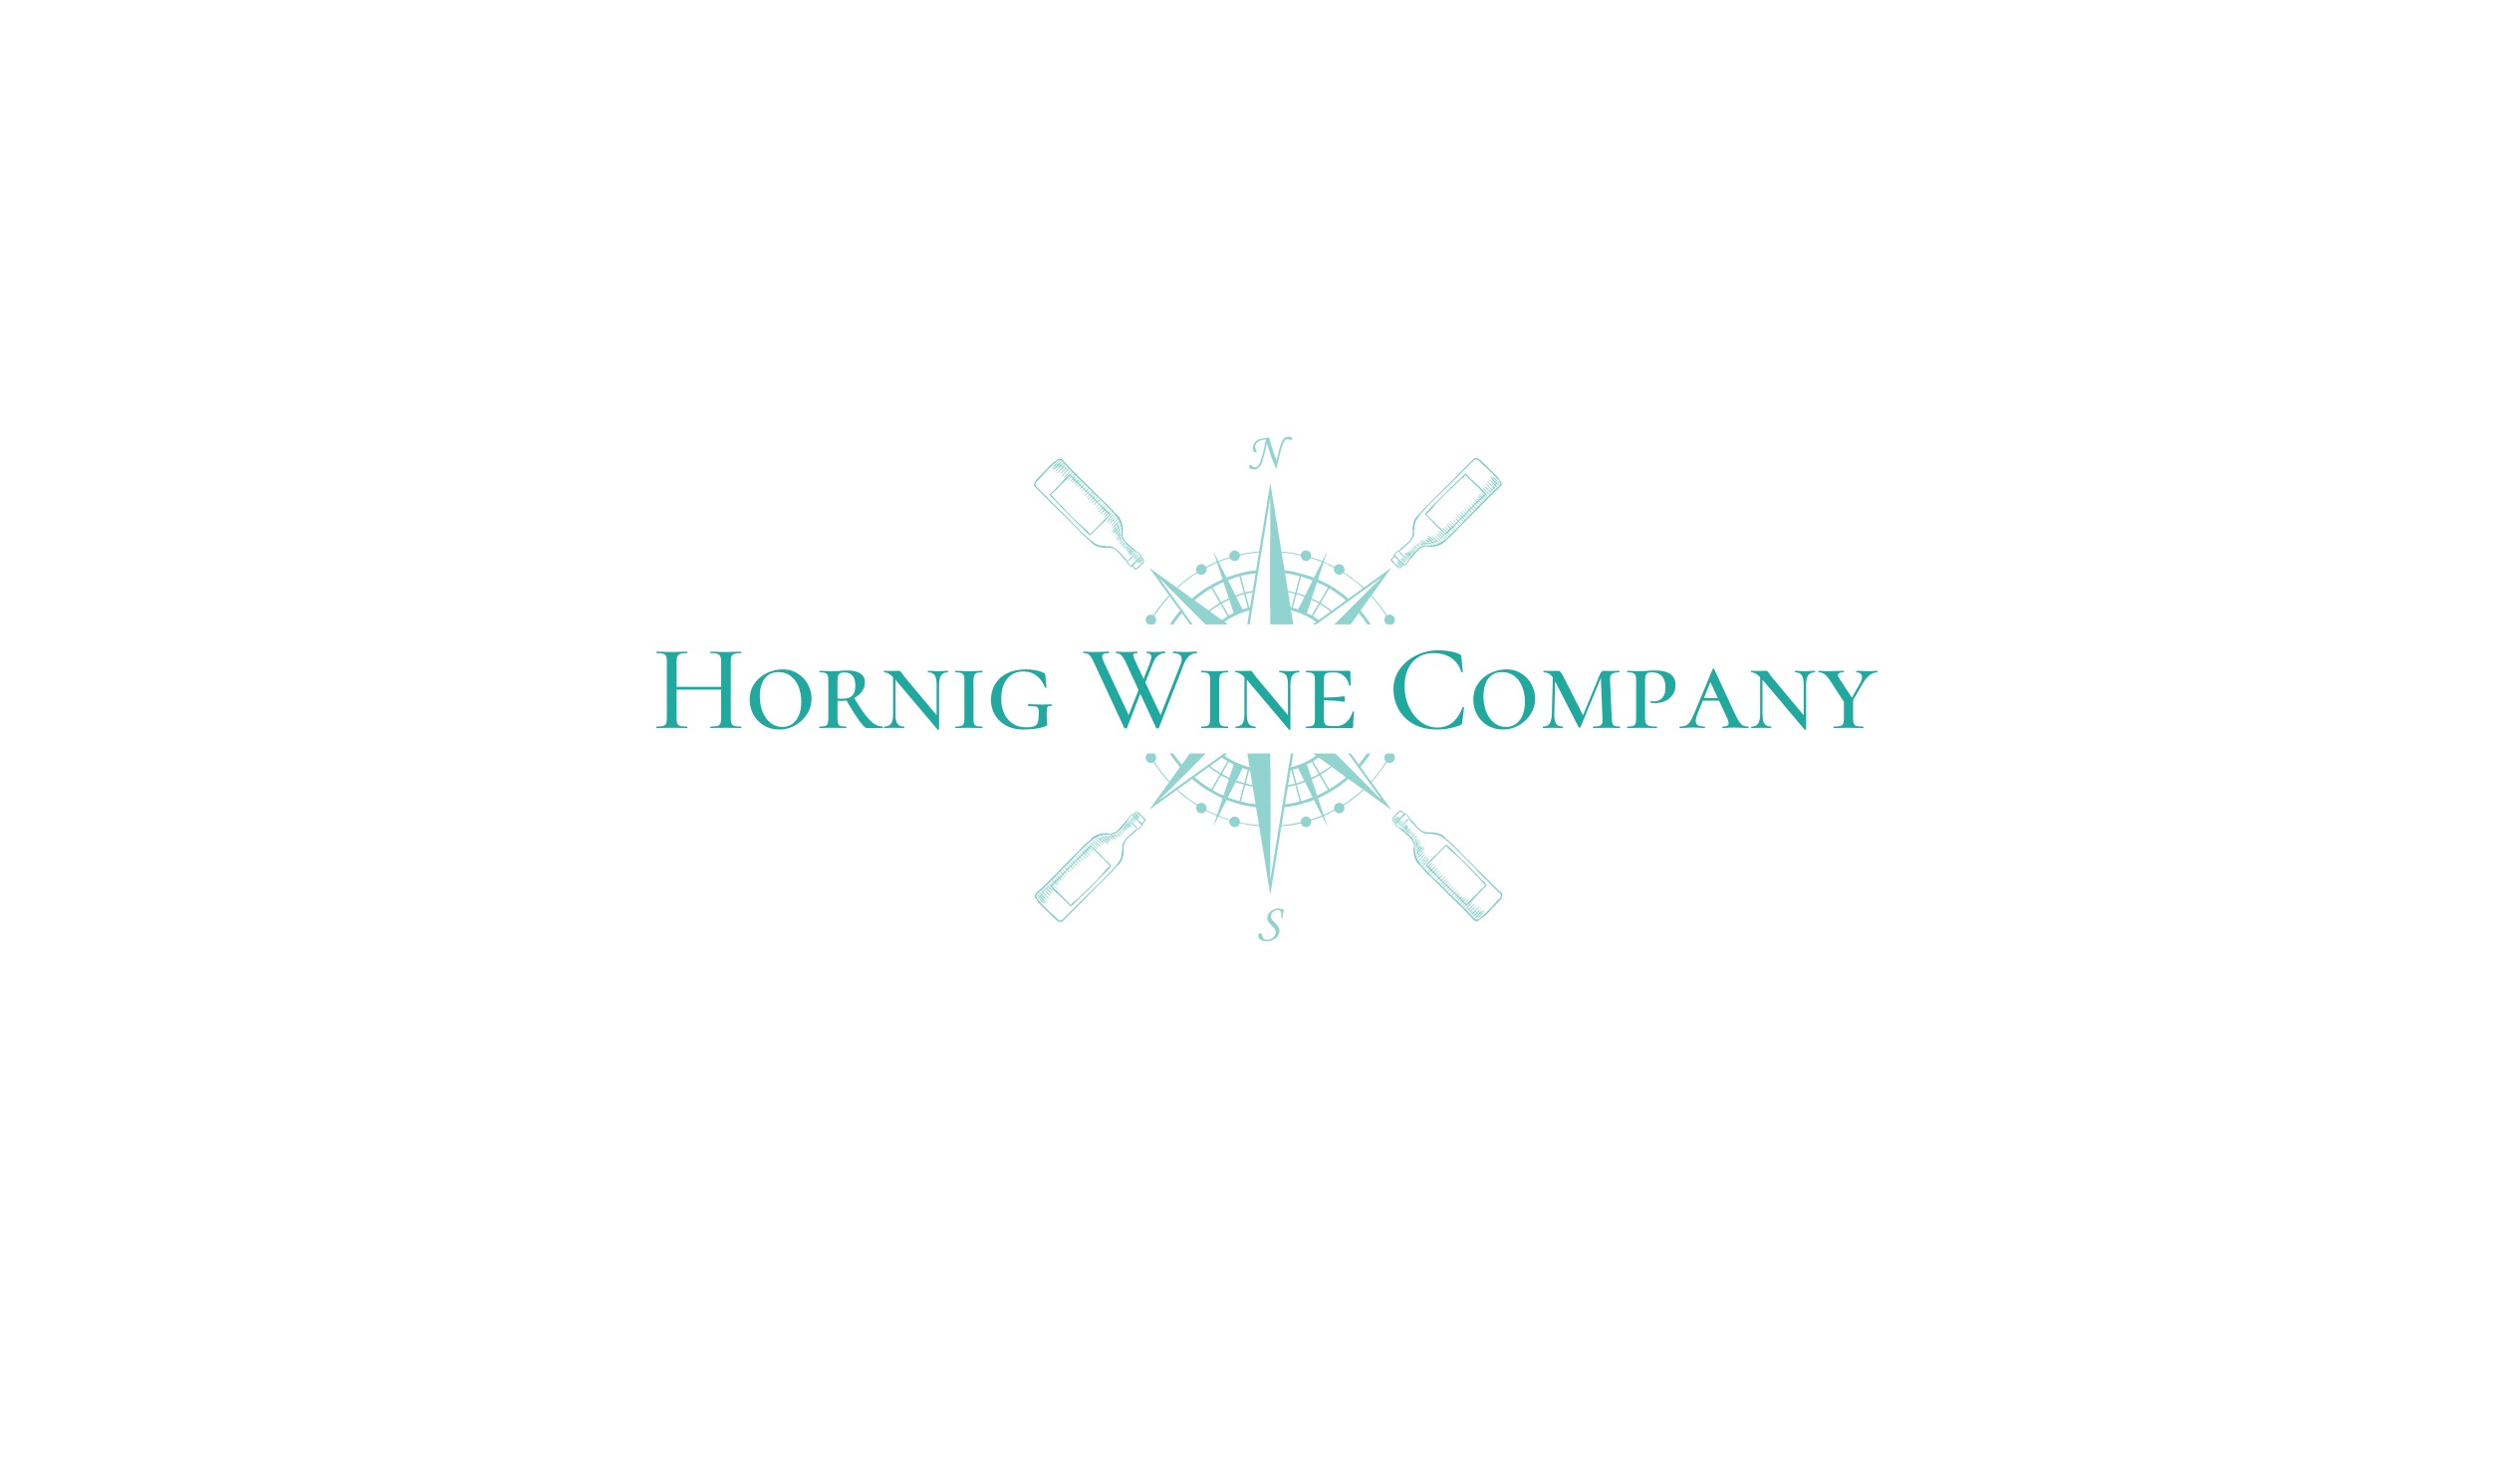 Hornig Wine Company GmbH